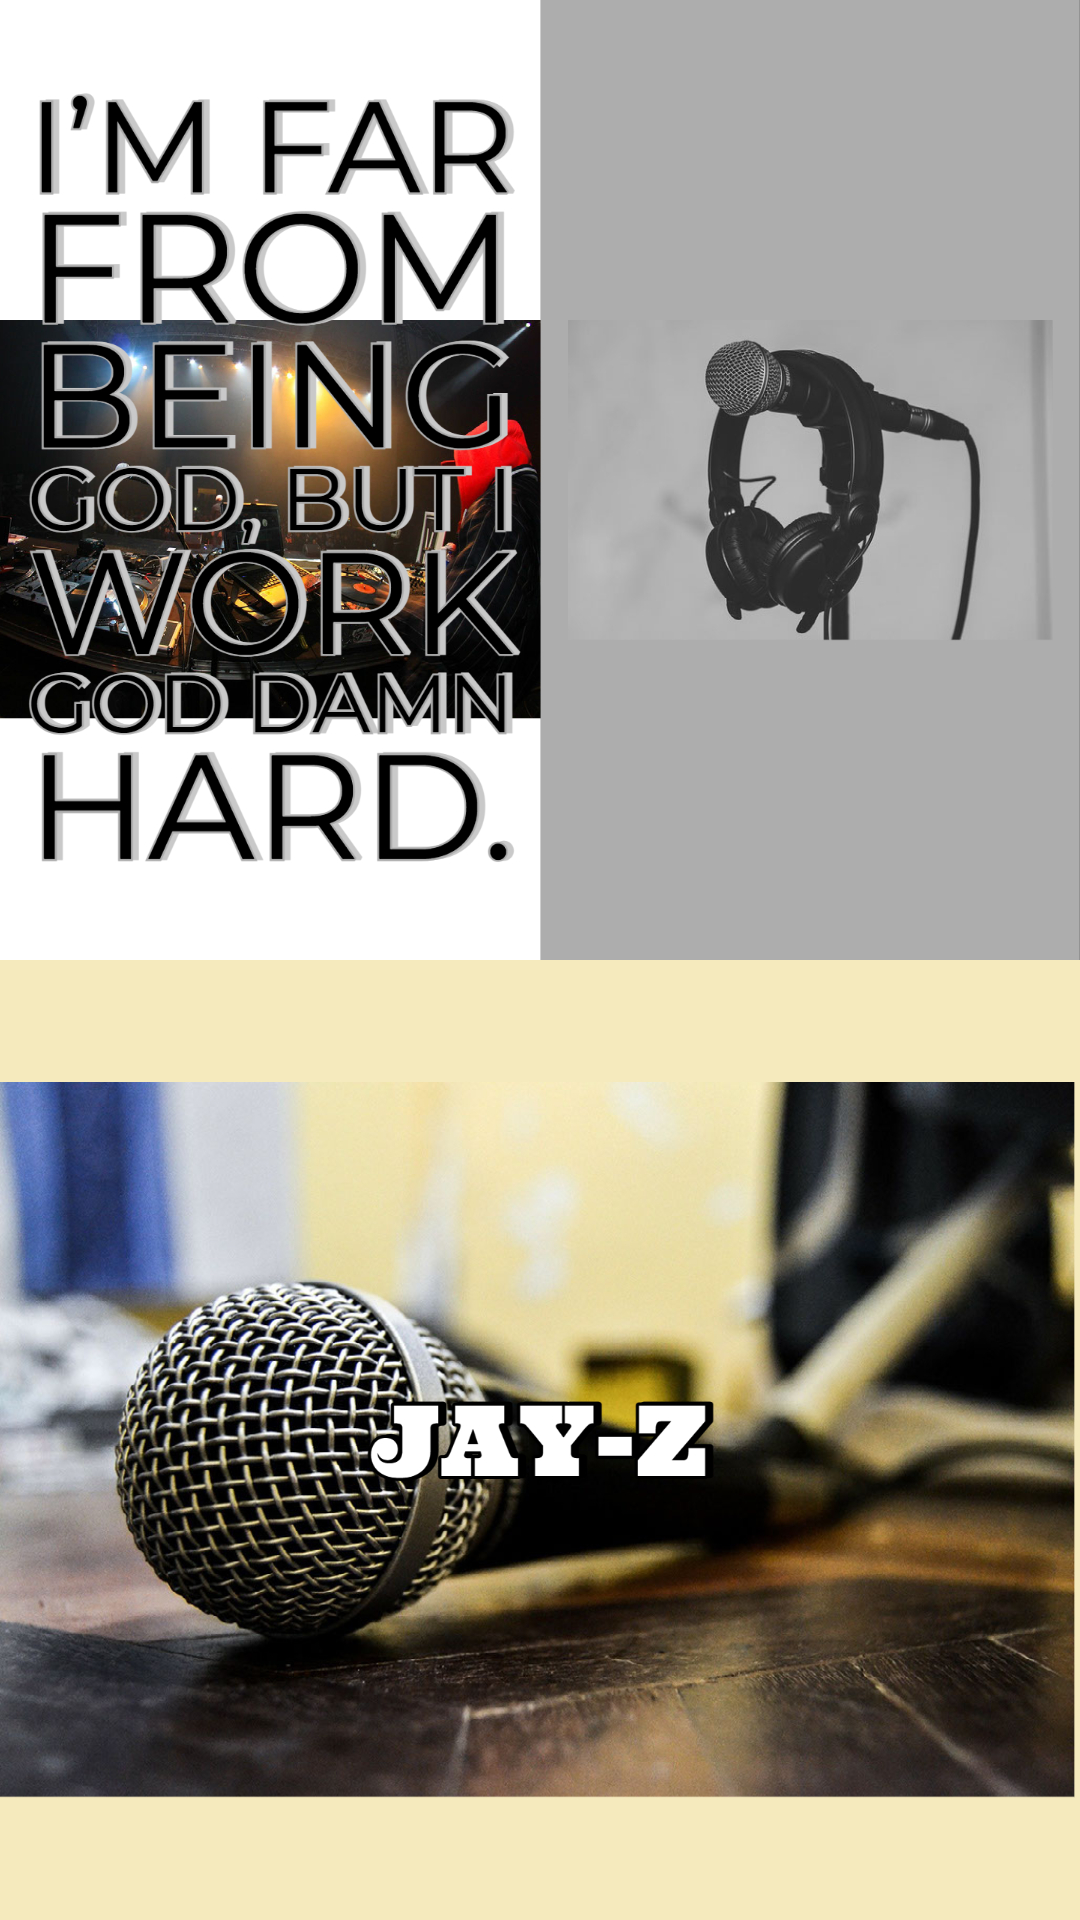 I’m far from being god, but I work god damn hard. I’m far from being god, but I work god damn hard. Jay-Z